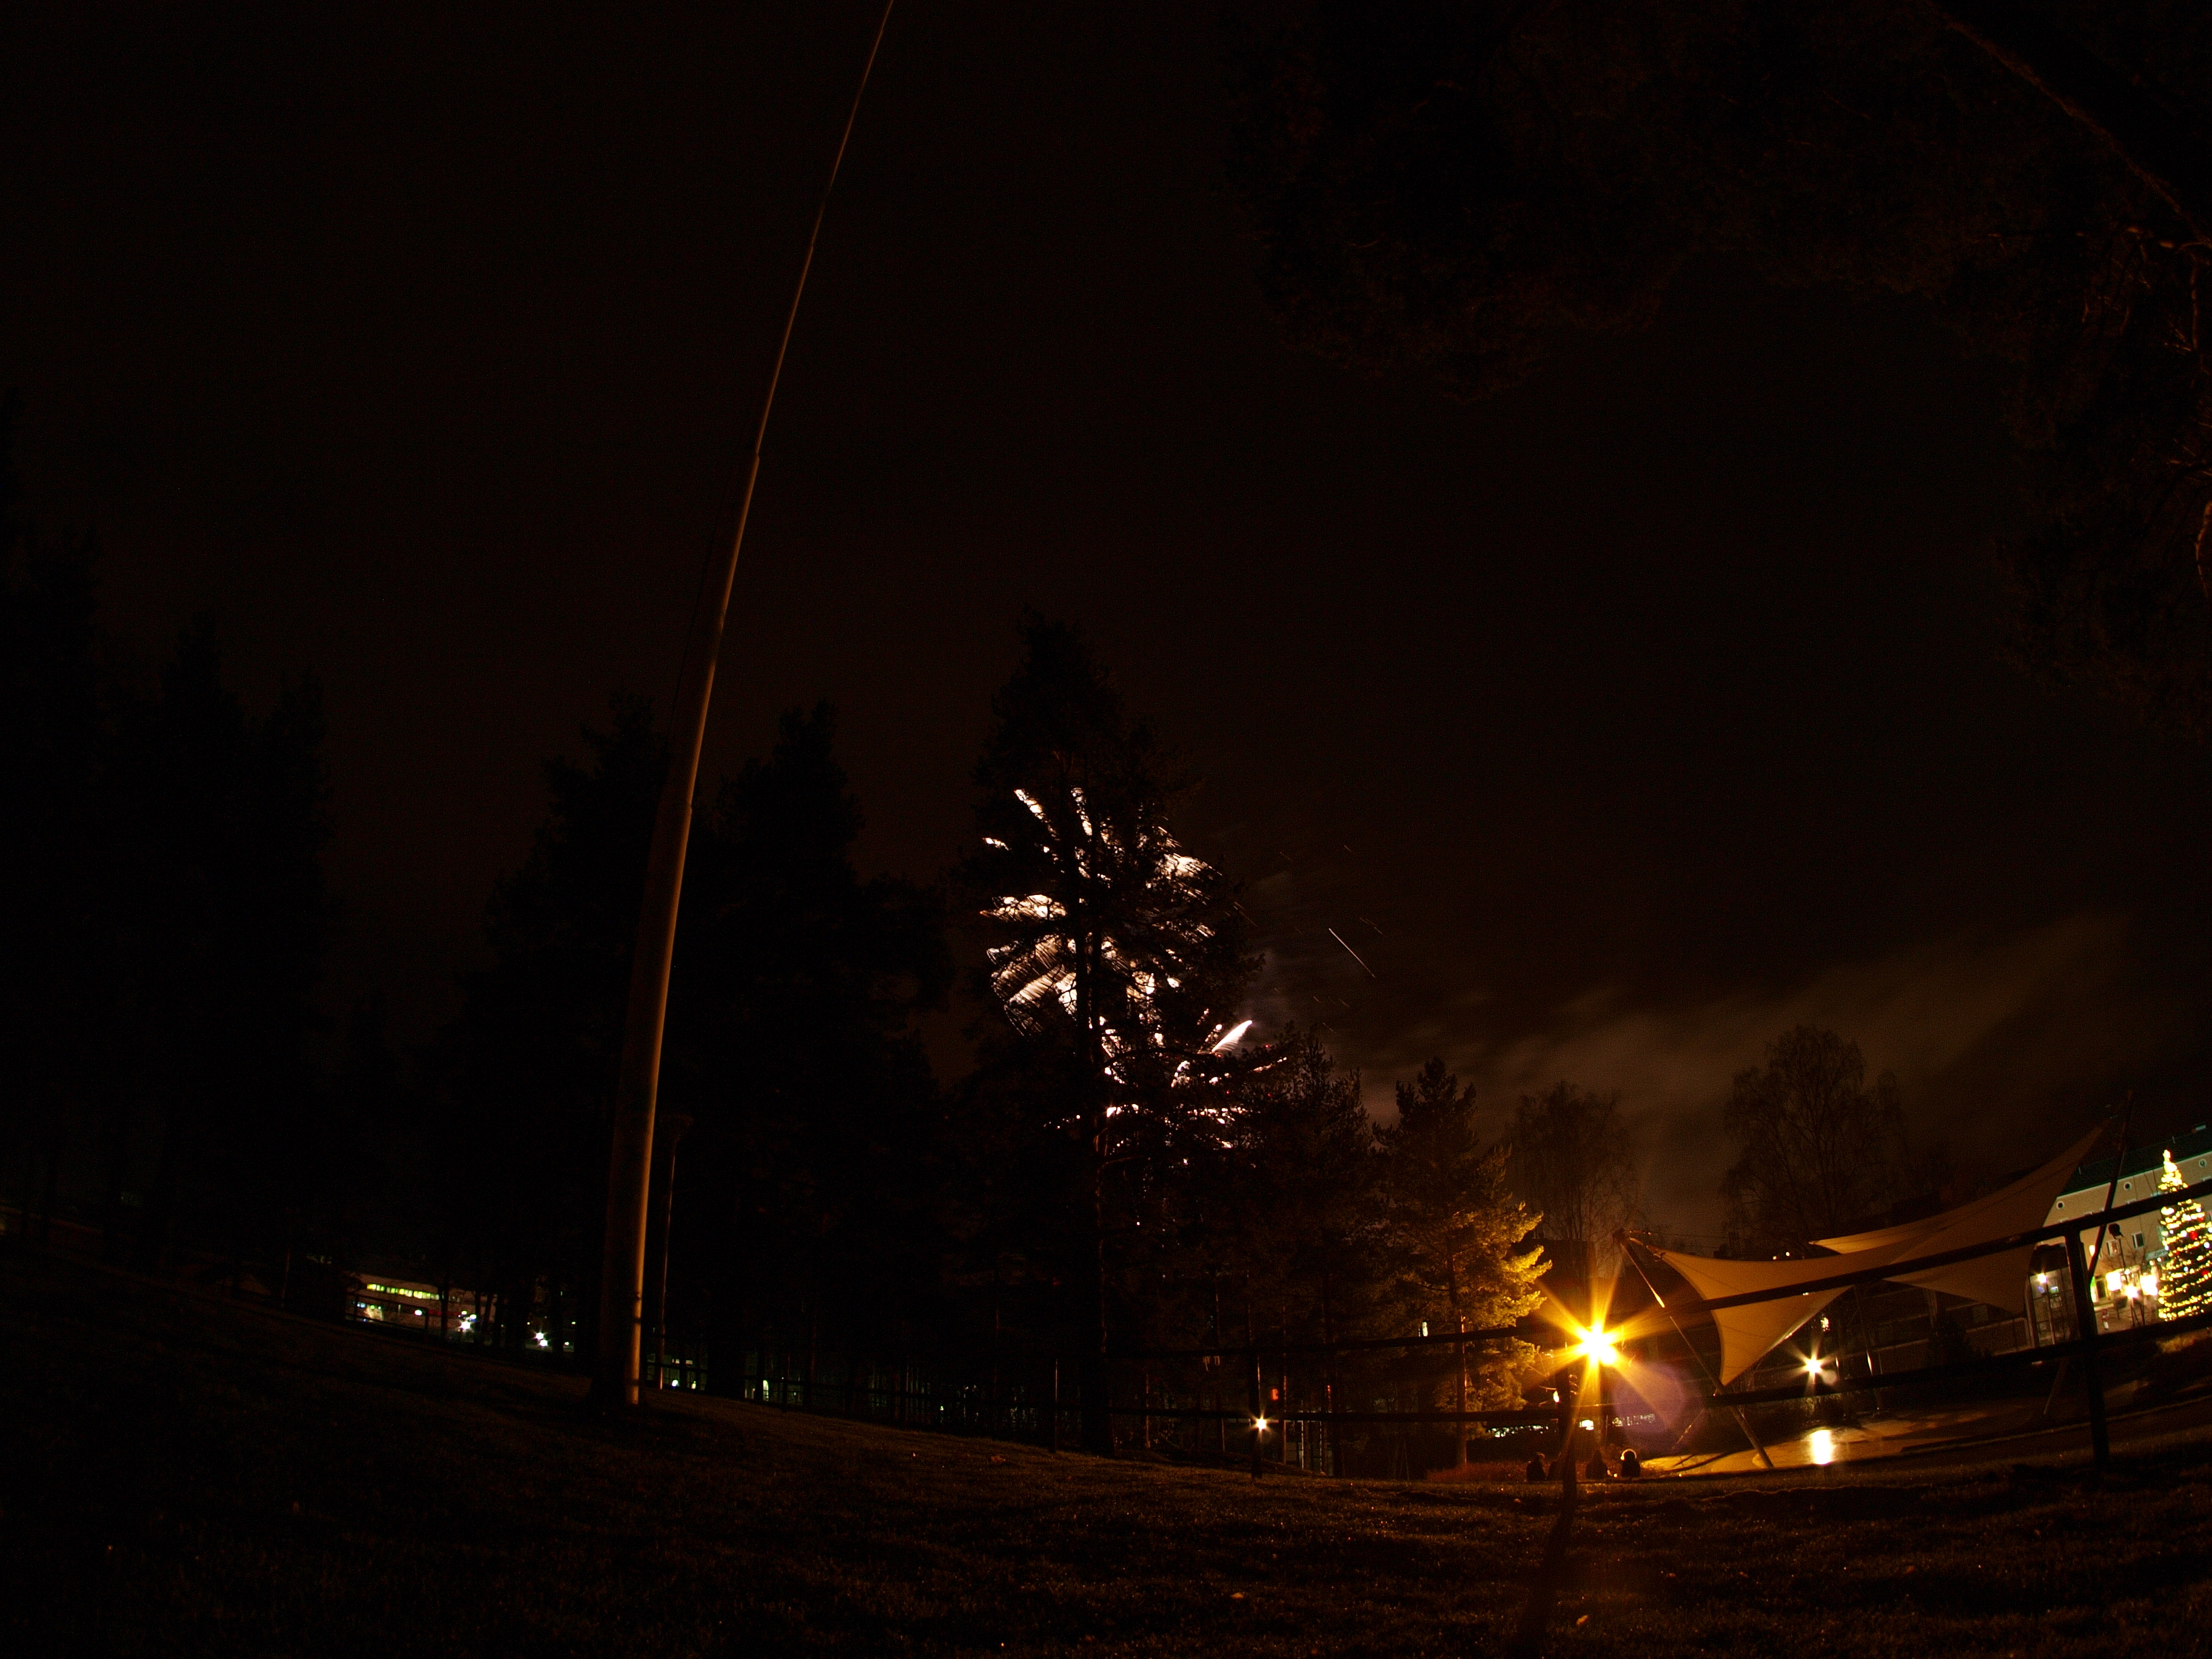 Fireworks photo